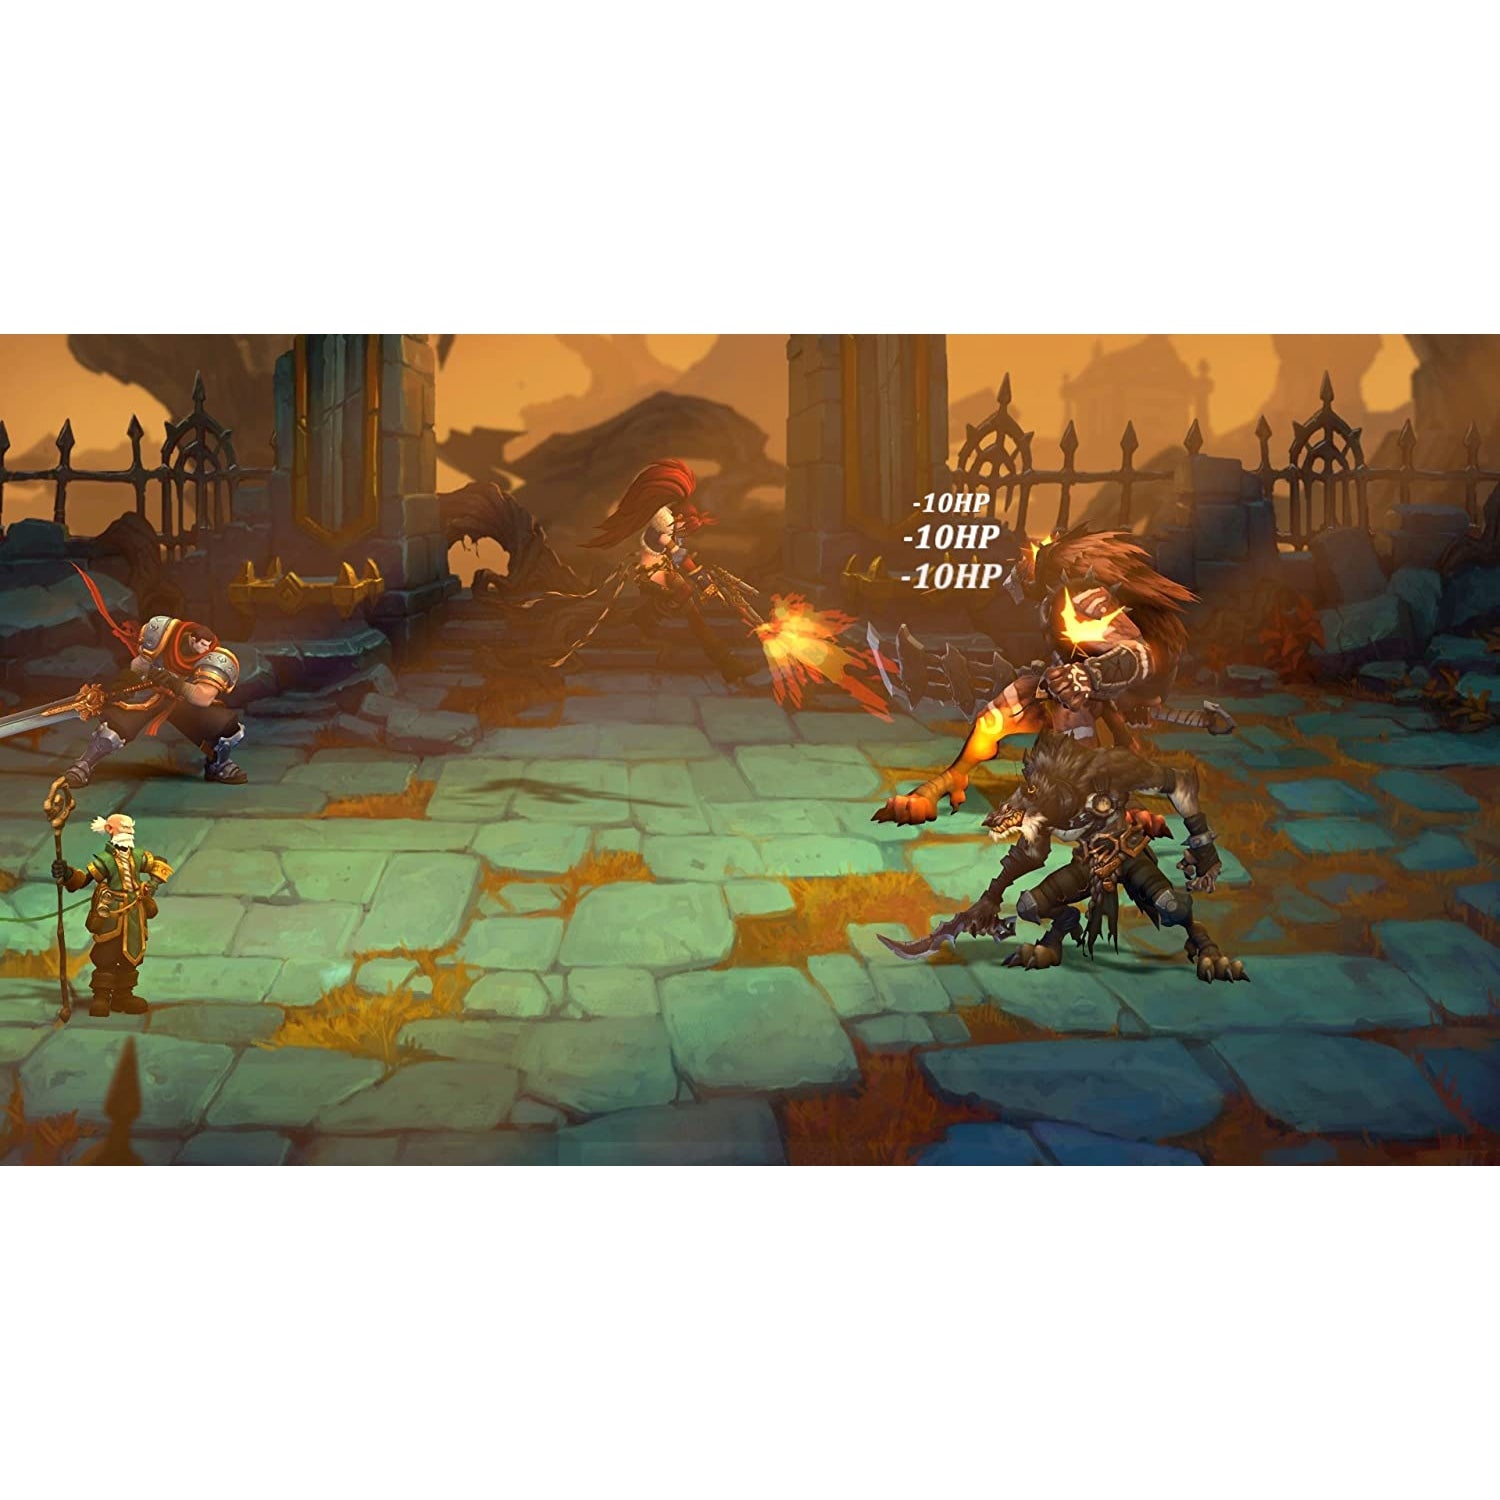 Battle Chasers Nightwar (Xbox One)